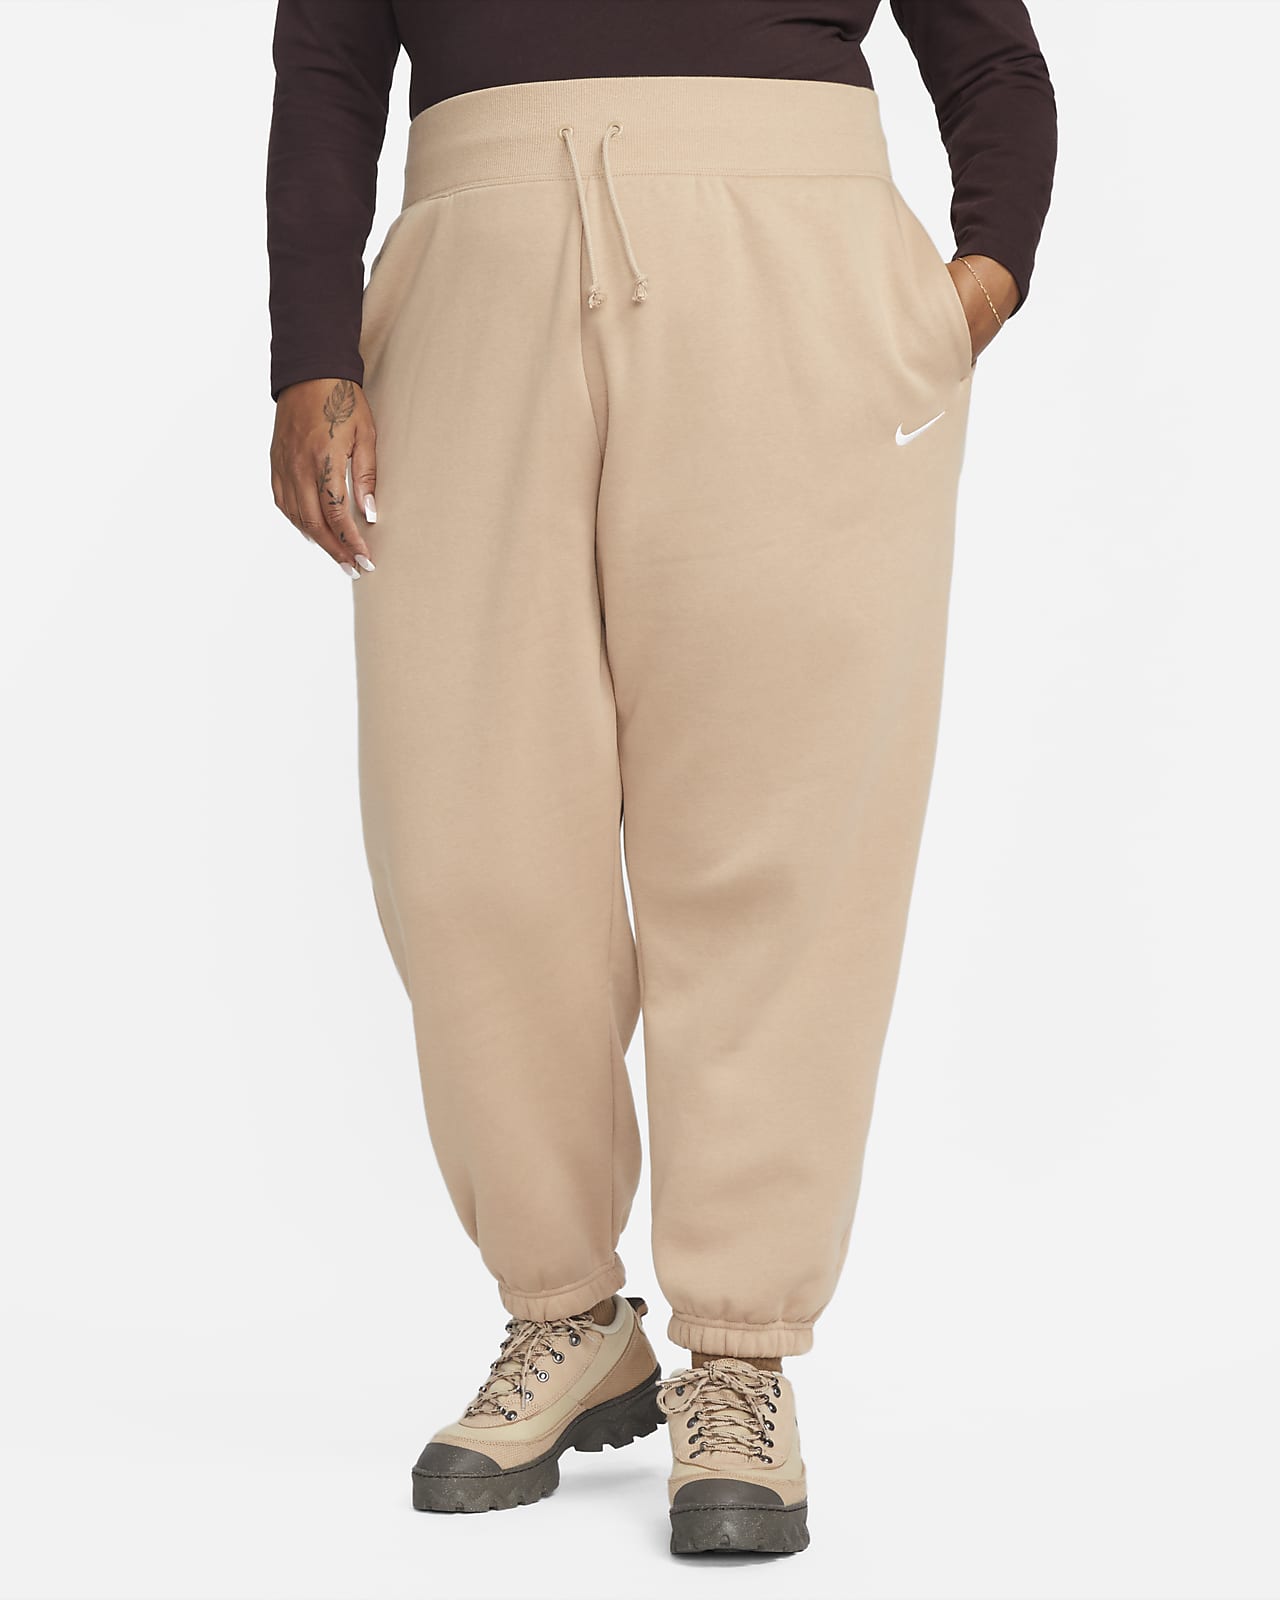 Nike Sportswear Phoenix Fleece Pantalons de xandall oversized de cintura alta (talles grans) - Dona